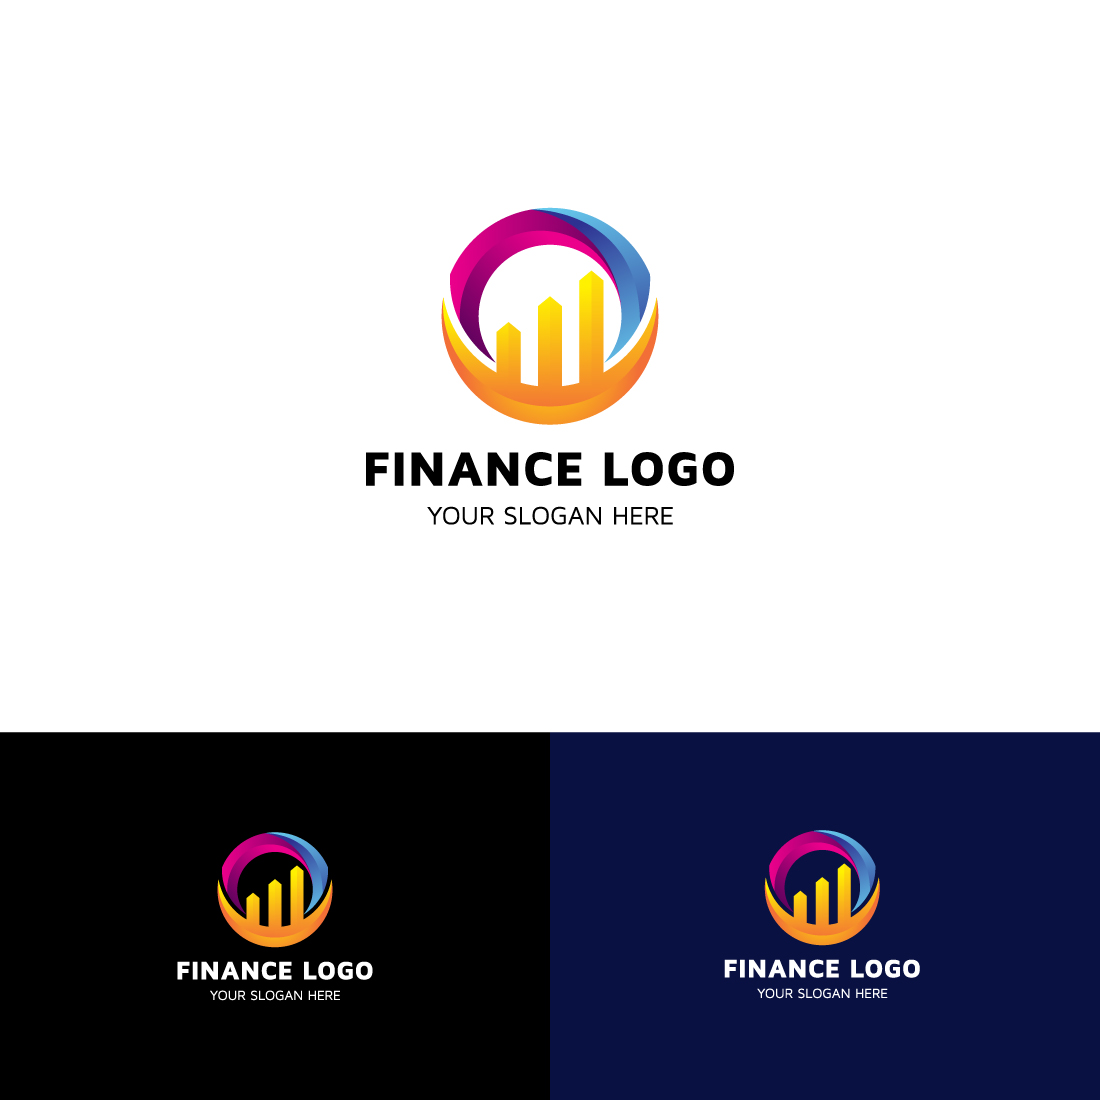 Business & Finance Symbols Vector Logo Design preview image.